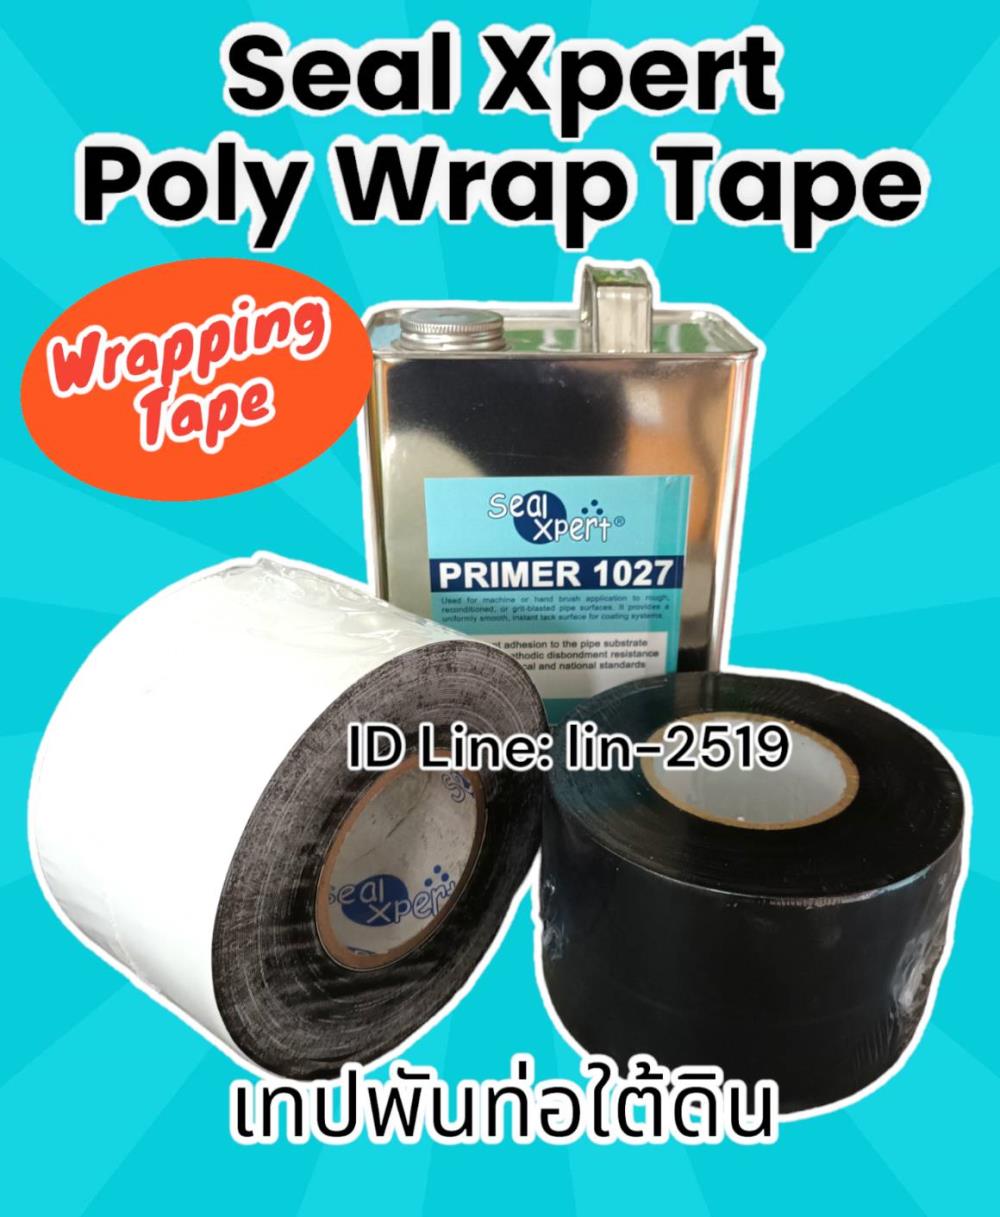 Seal Xpert Poly Wrap Tape (Wrapping Tape) เทปพันท่อใต้ดินใช้พันท่อก่อนฝังดิน นำเข้าจากสิงคโปร์ เทปพีอีพันท่อเพื่อป้องกันสนิม การกัดกร่อน ตามมาตรฐาน AWWA C-214